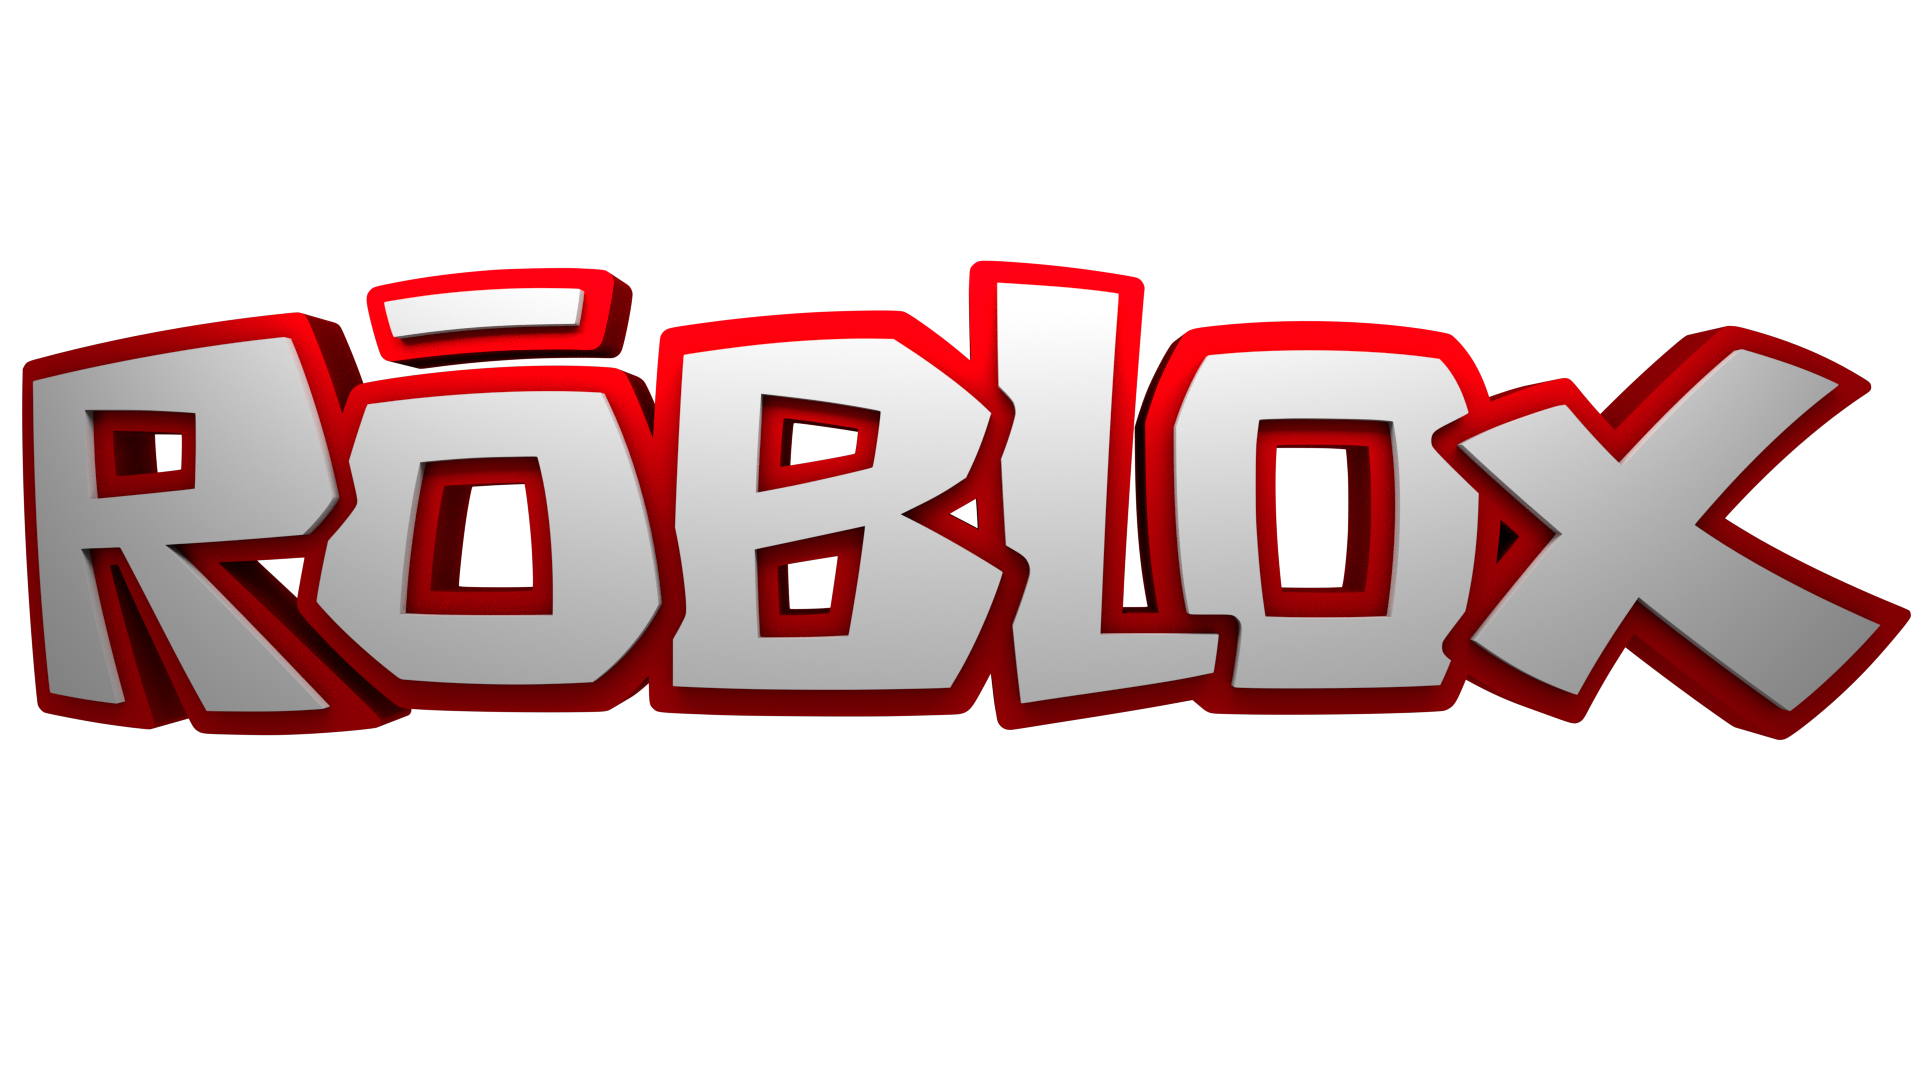 Roblox Logo PNG Images, Transparent Roblox Logo Image Download - PNGitem